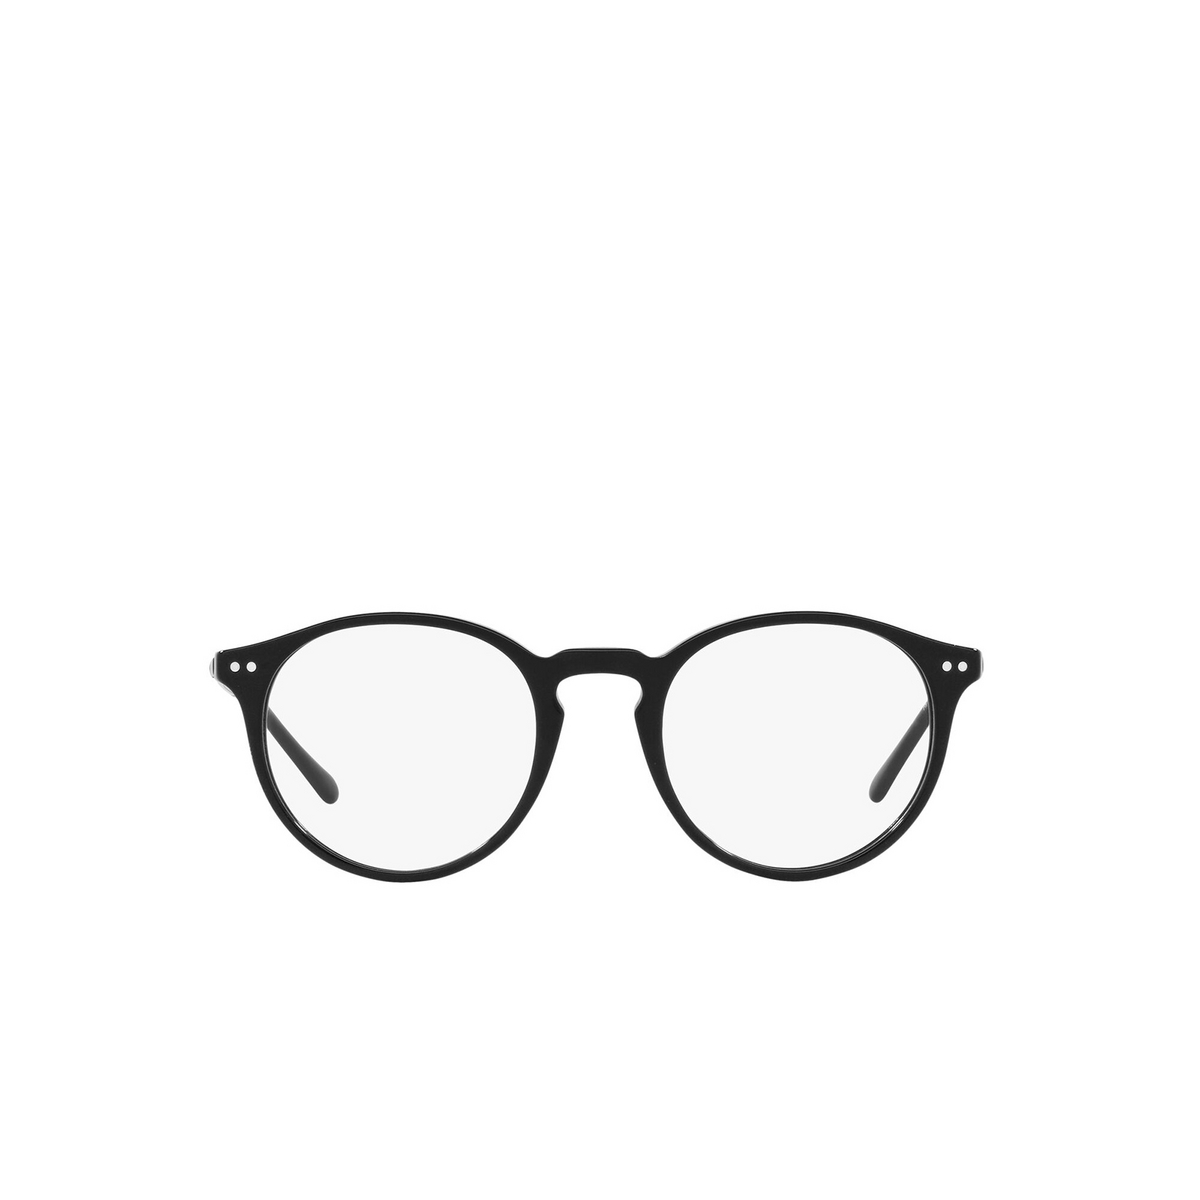 Polo Ralph Lauren® Round Eyeglasses: PH2227 color Shiny Black 5001 - front view.